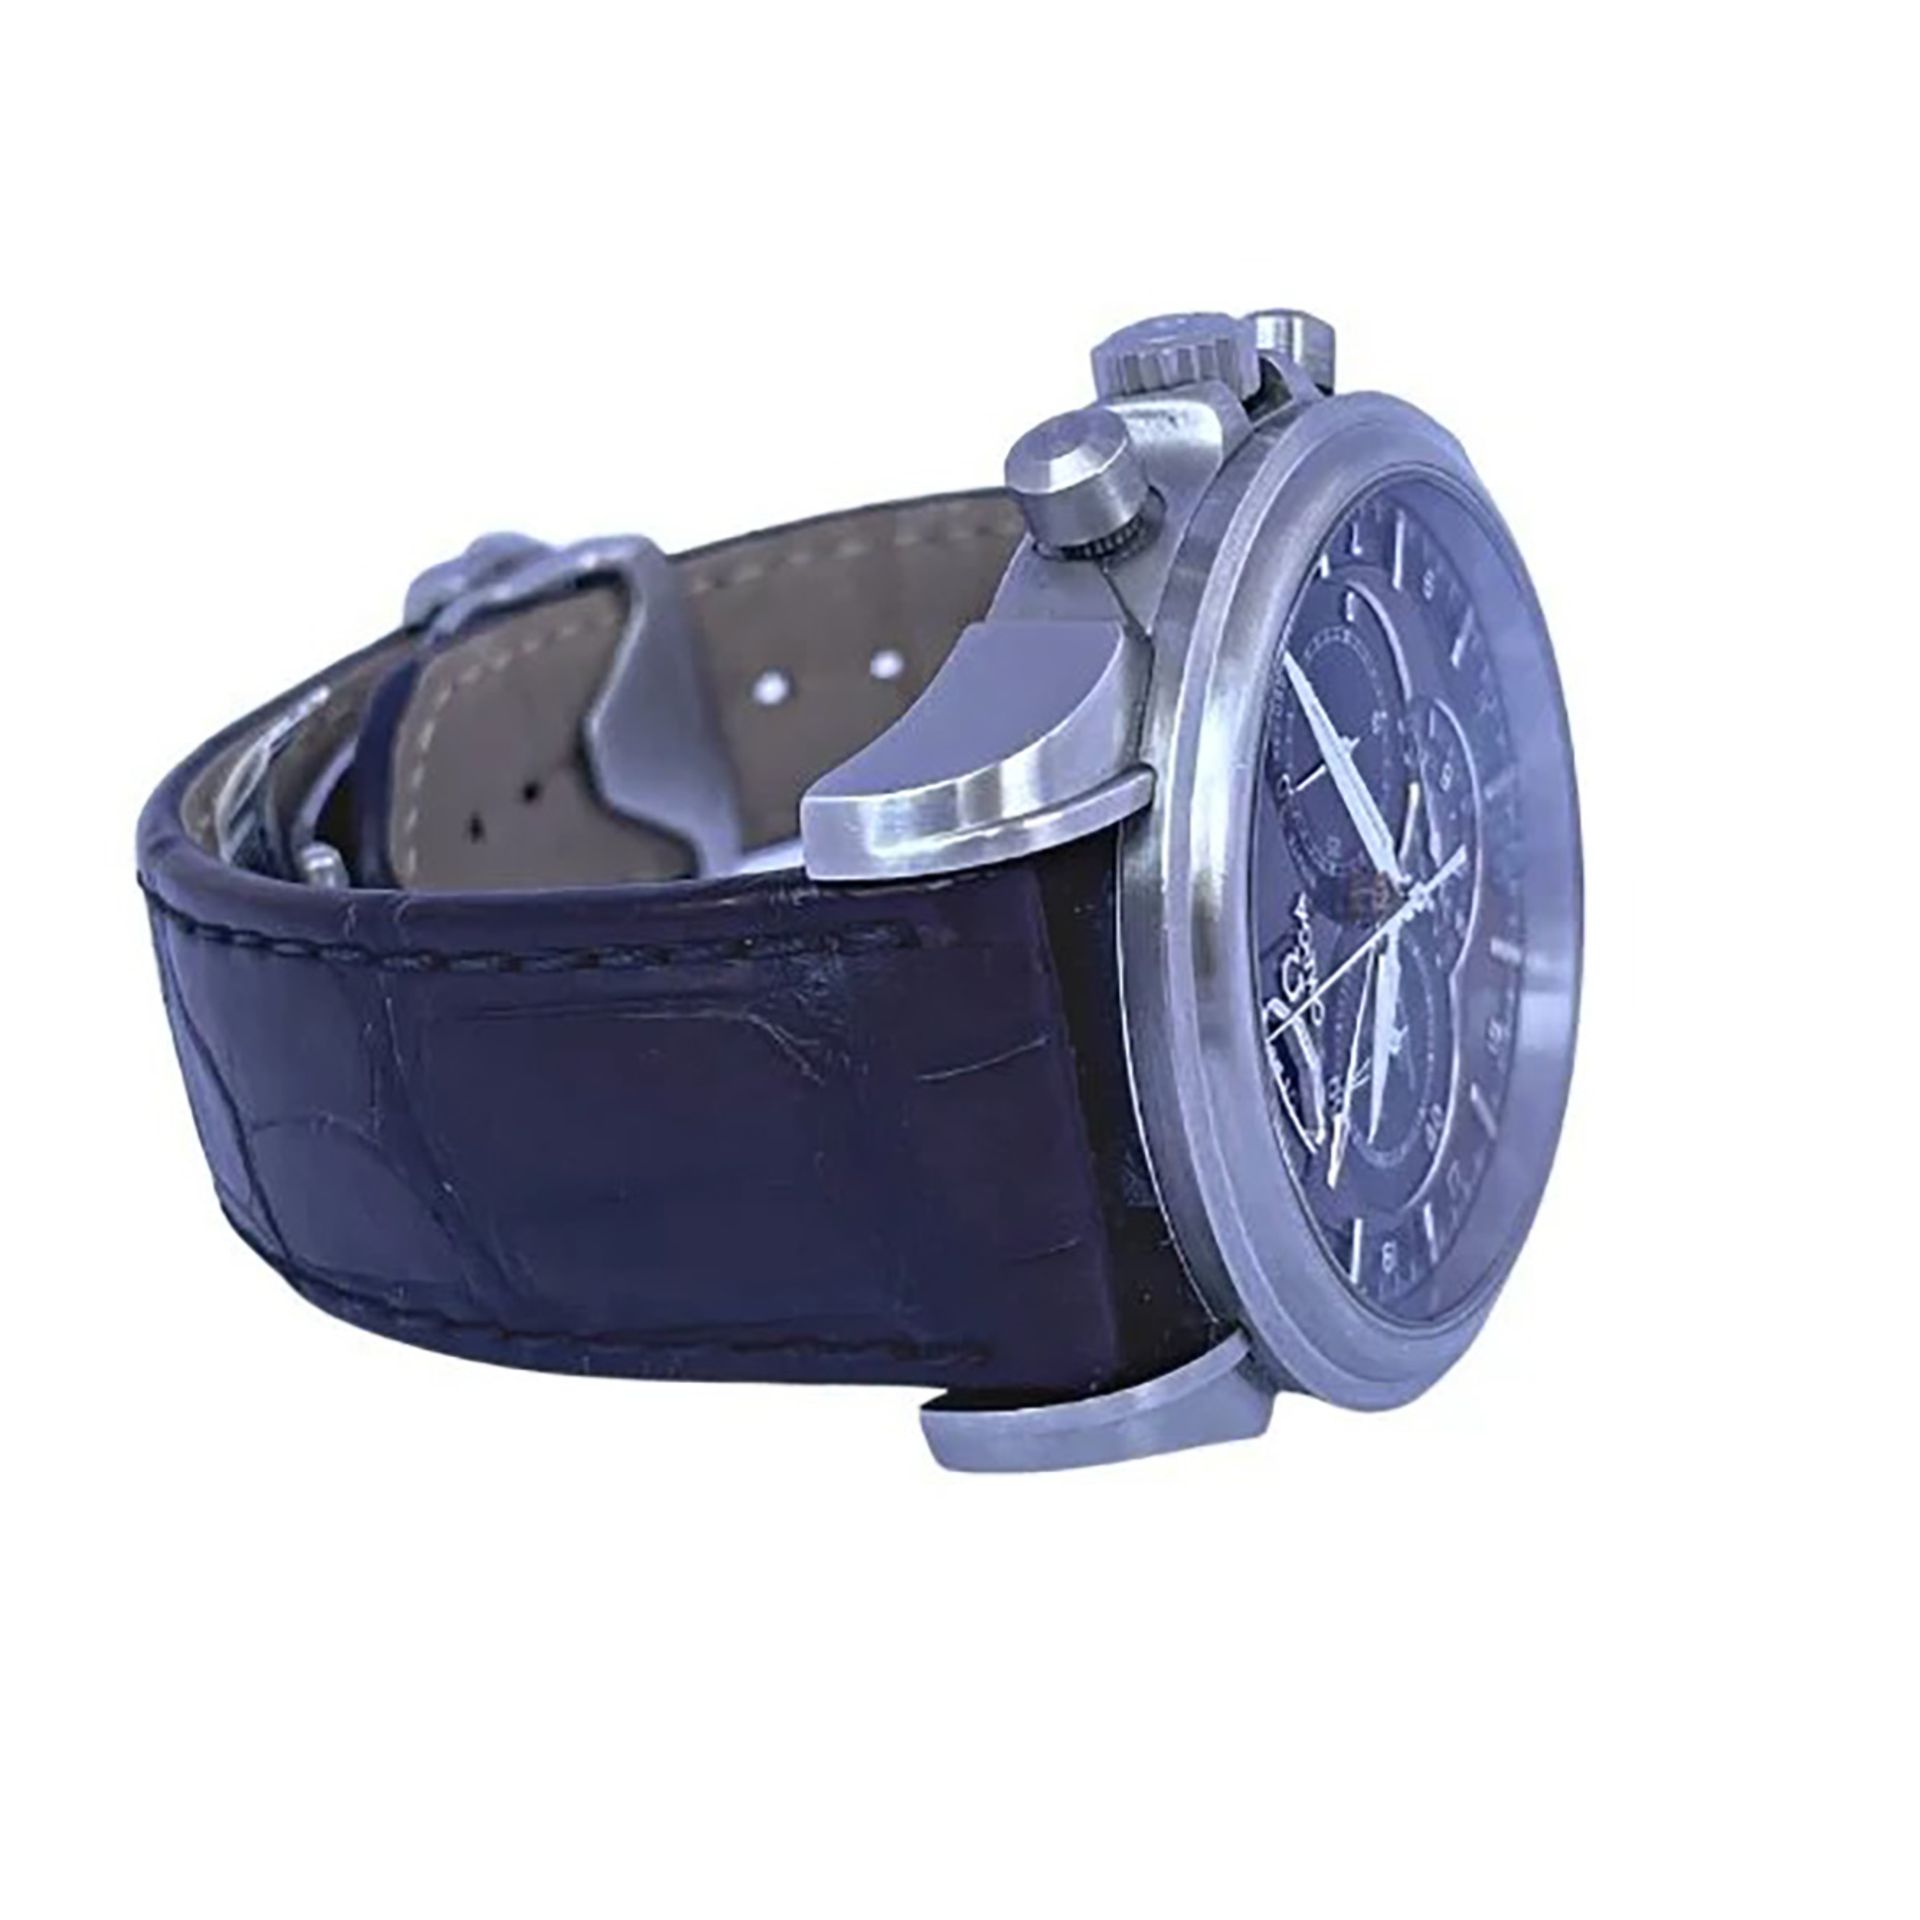 Omega De Ville Co-Axial Chronoscope wristwatch - Image 5 of 6